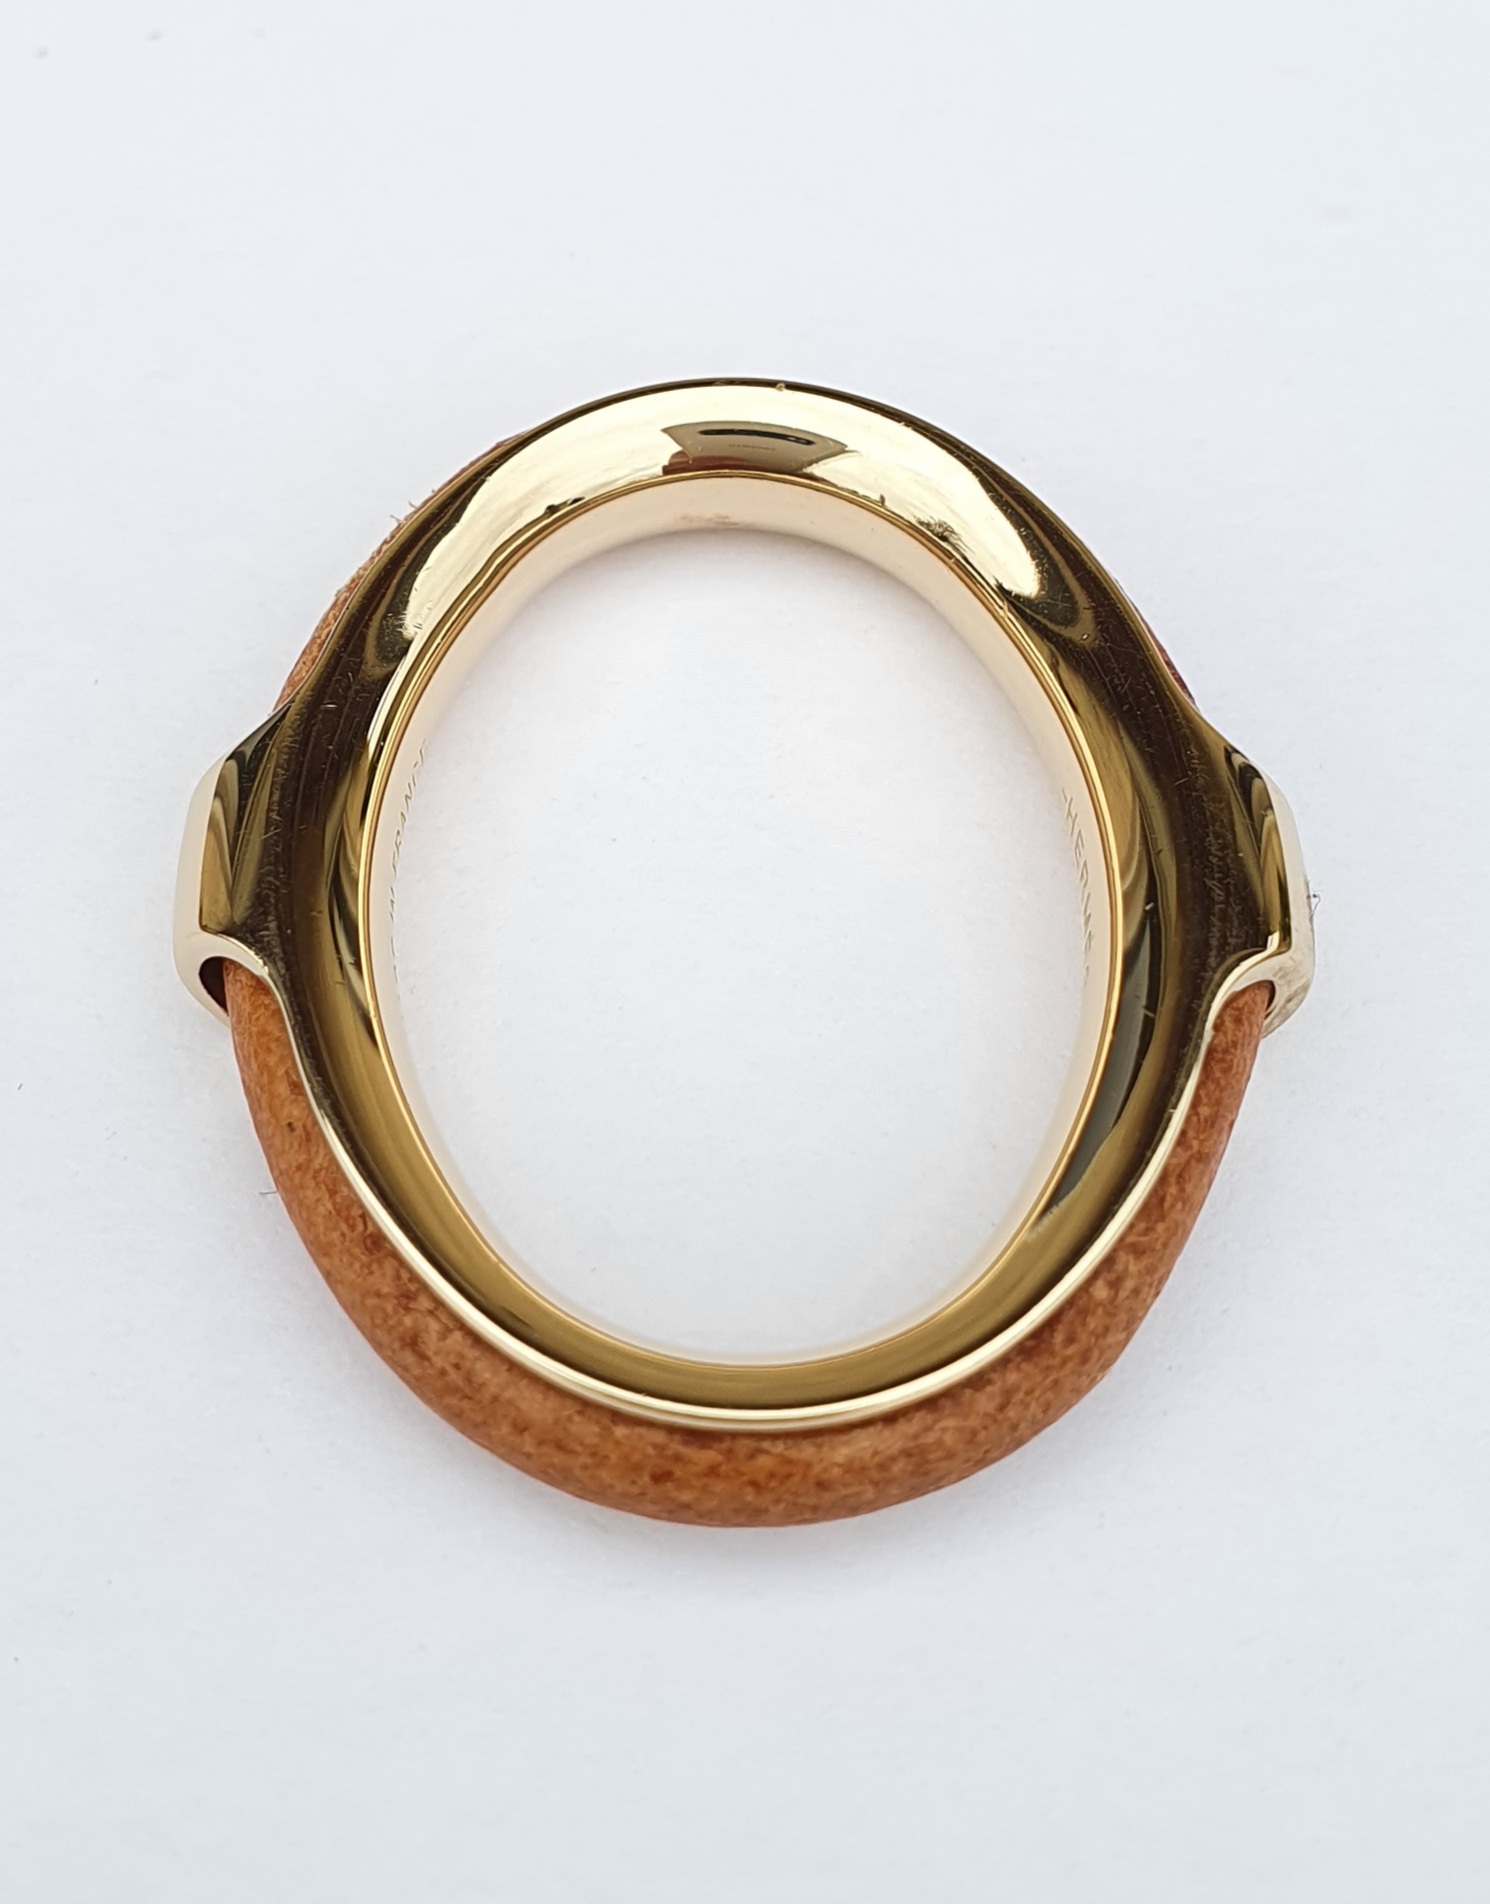 Hermes Hermes Paris Cosmos Bijouterie Fantaisie Gold Tone Scarf Ring